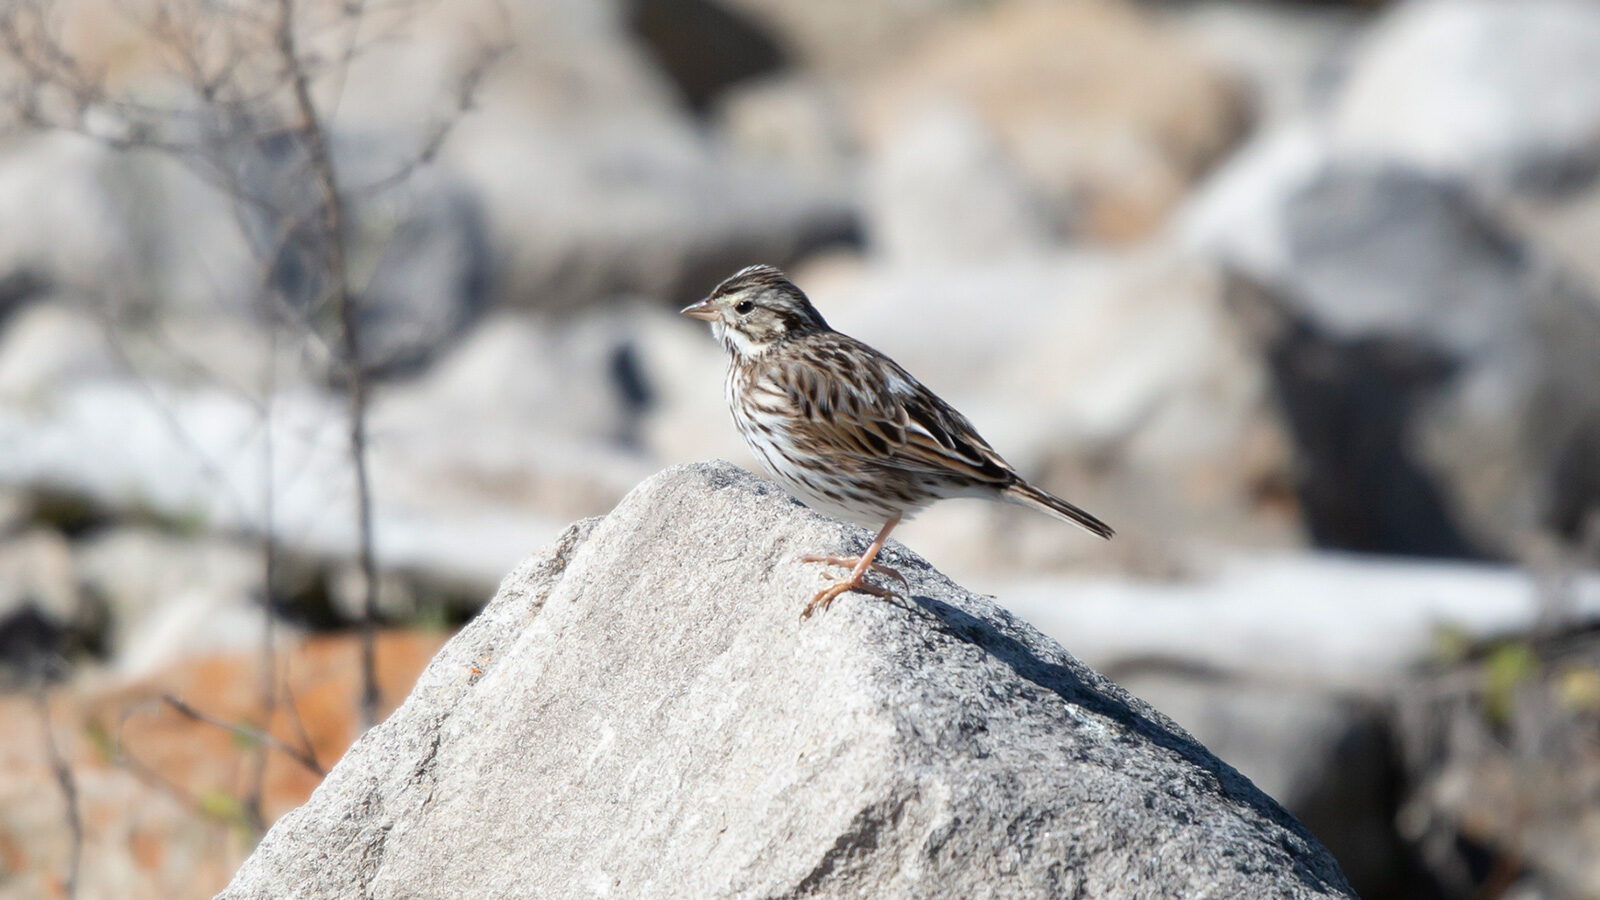 Vesper sparrow standing on stone